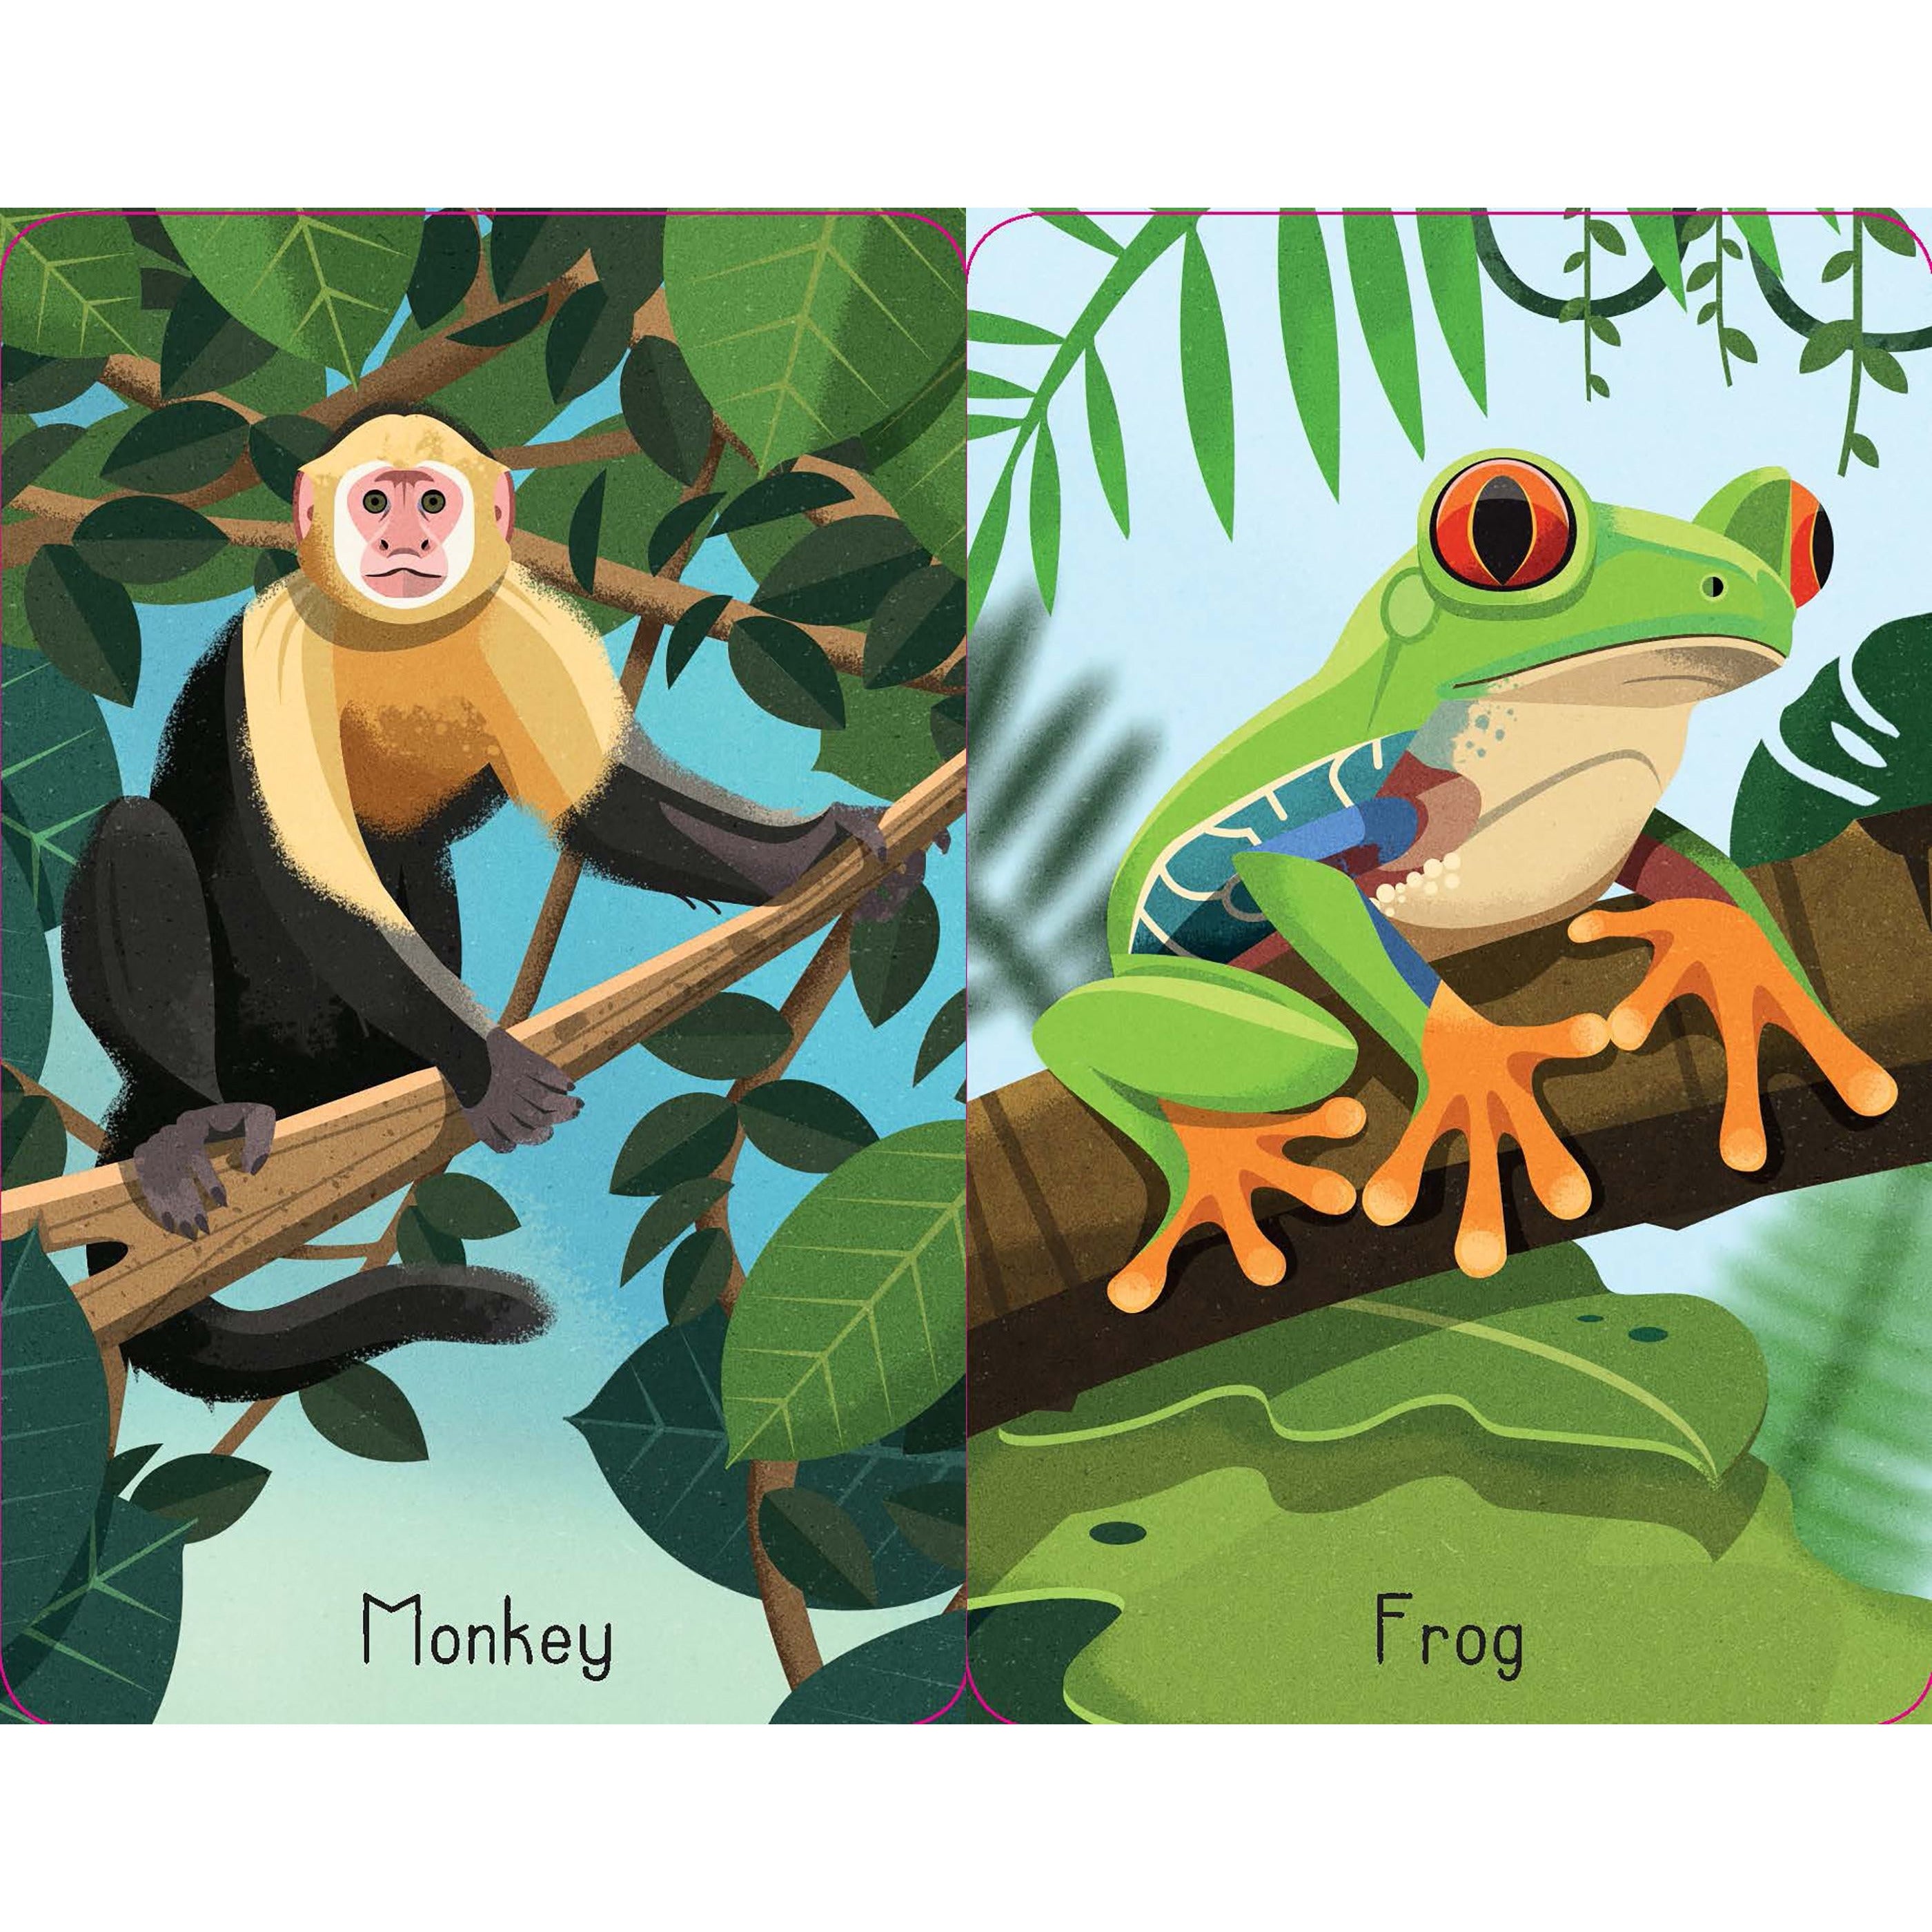 Jungle Snap Cards